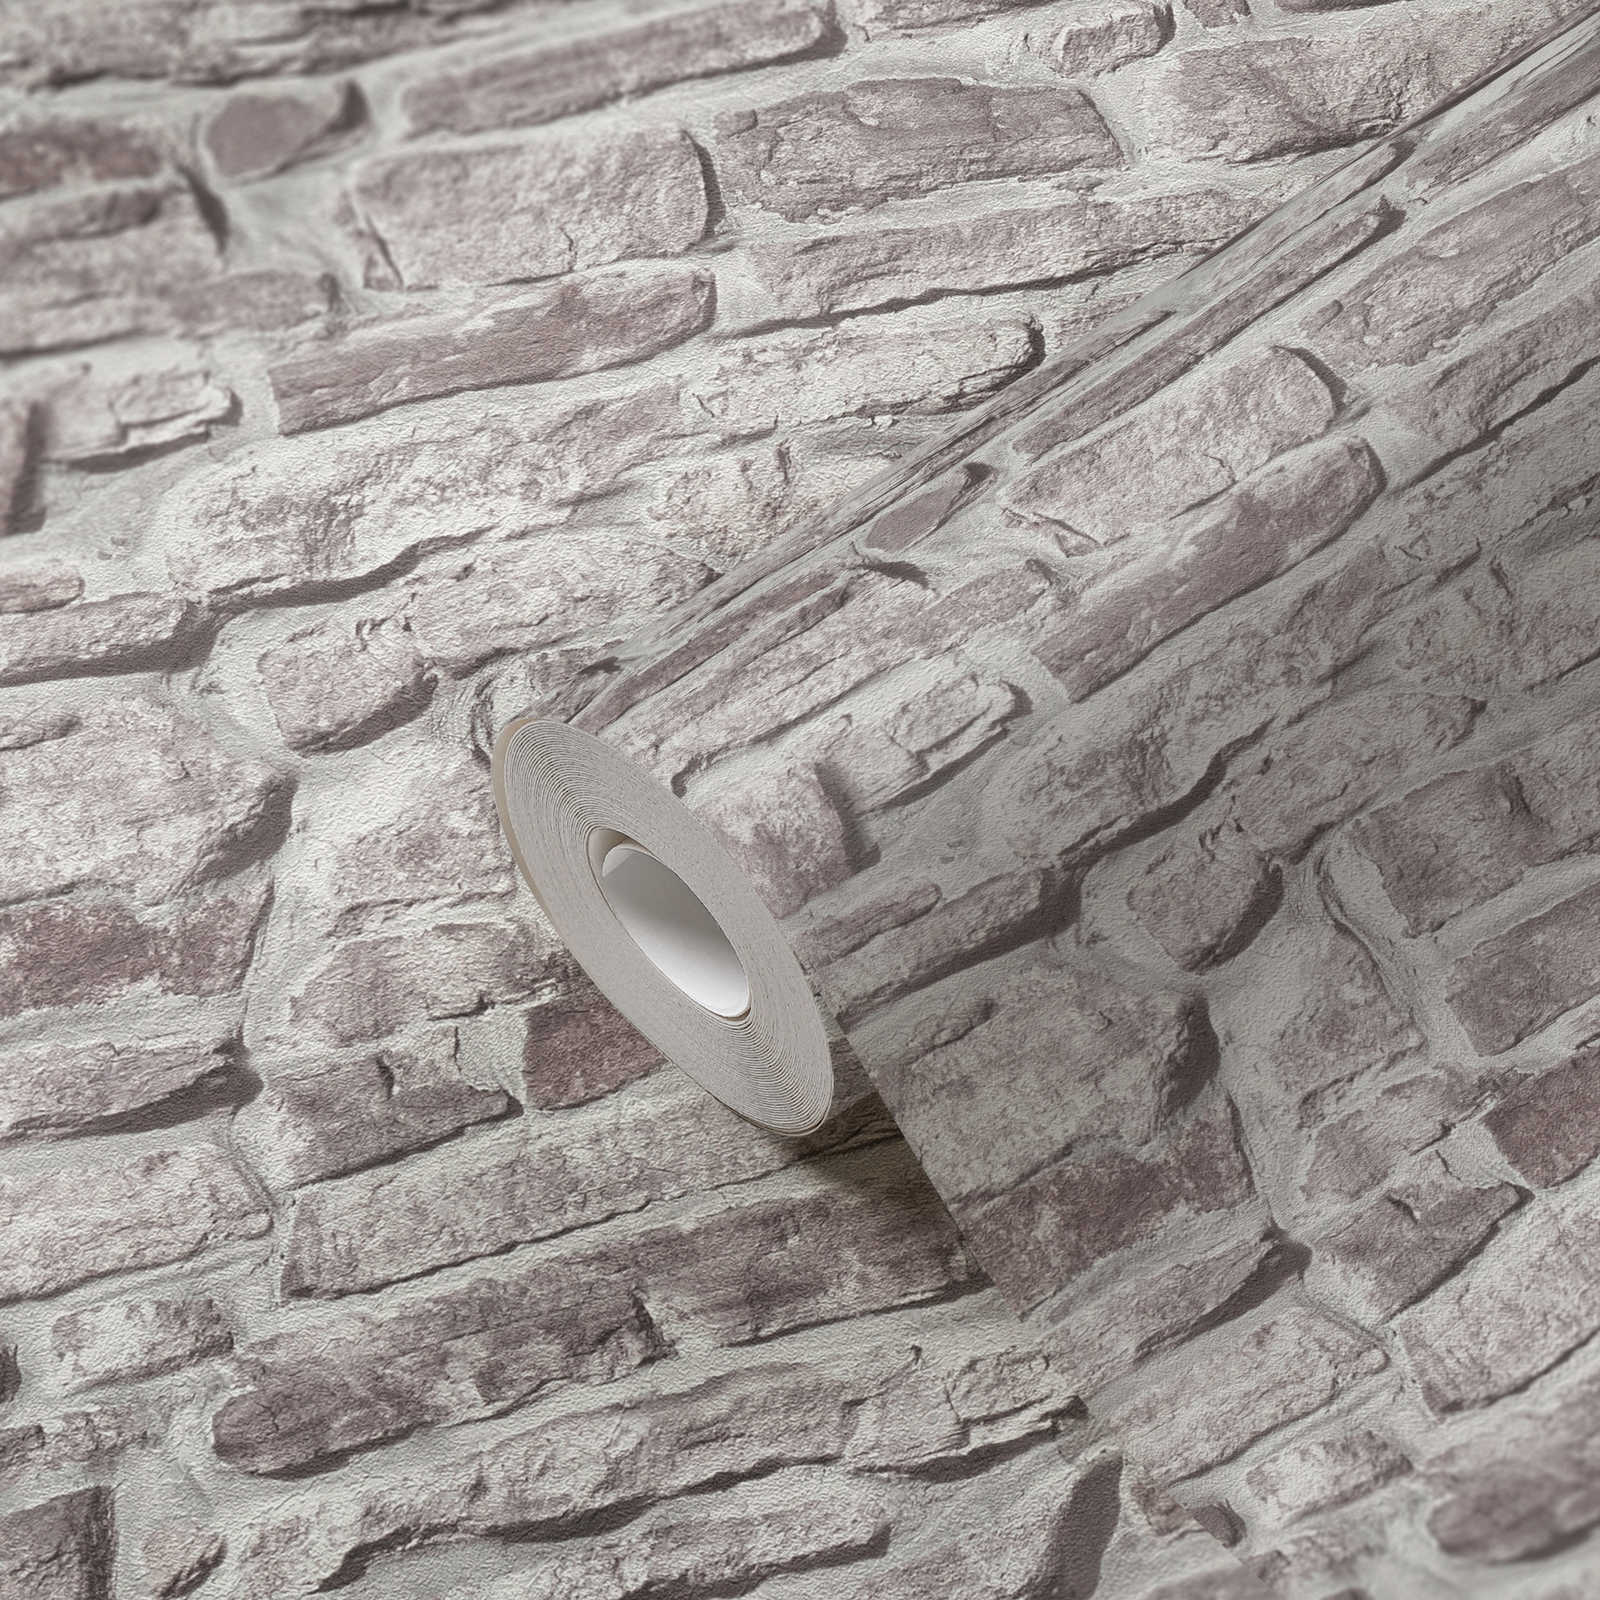             Papel pintado tejido-no tejido aspecto piedra pared natural - gris, gris, blanco
        